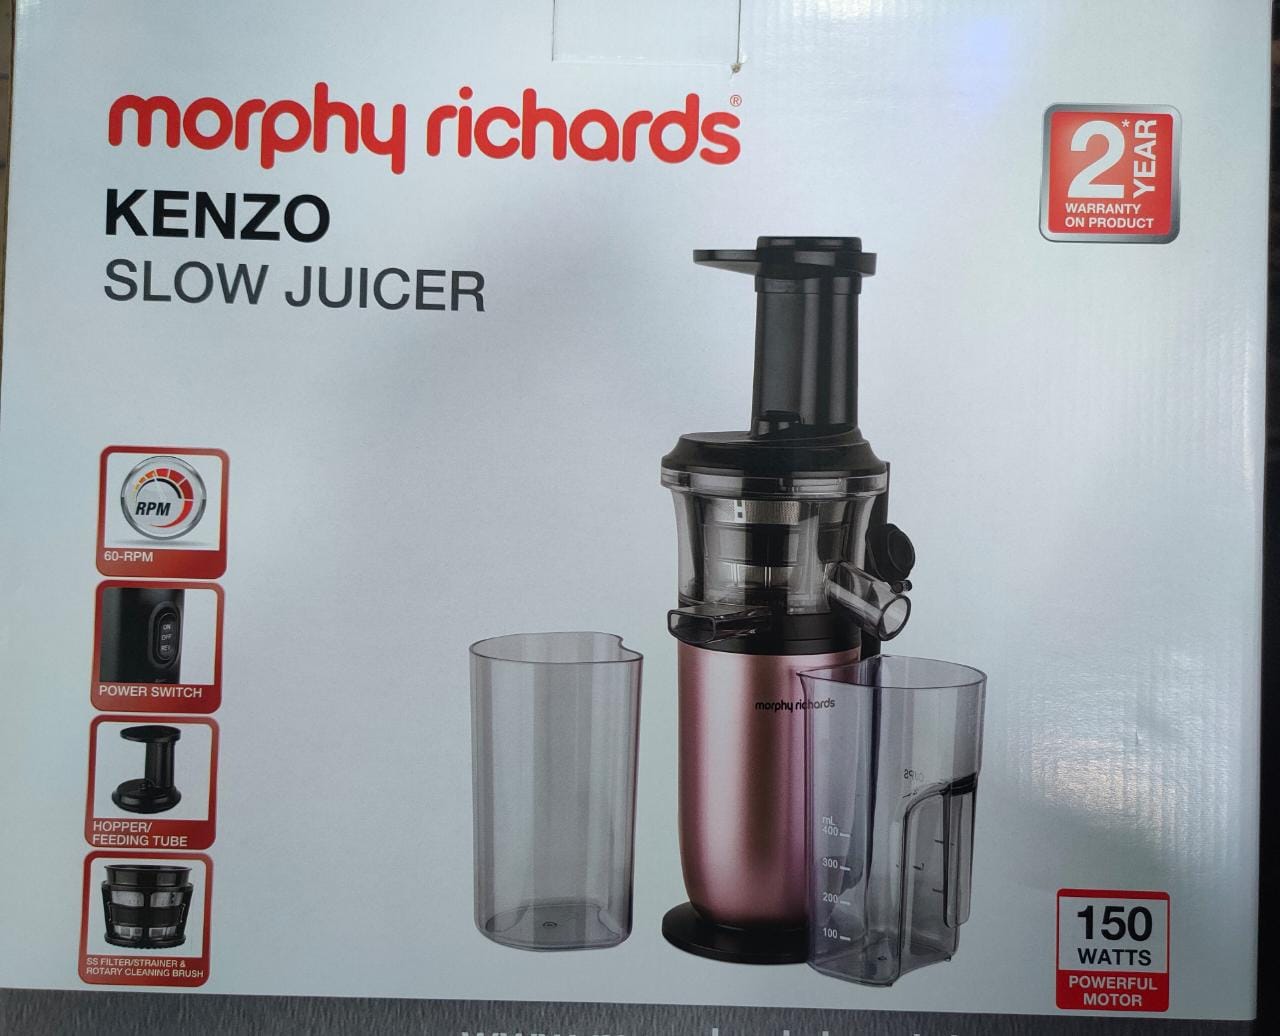 Morphy Richards KENZO 150-Watt Slow Juicer